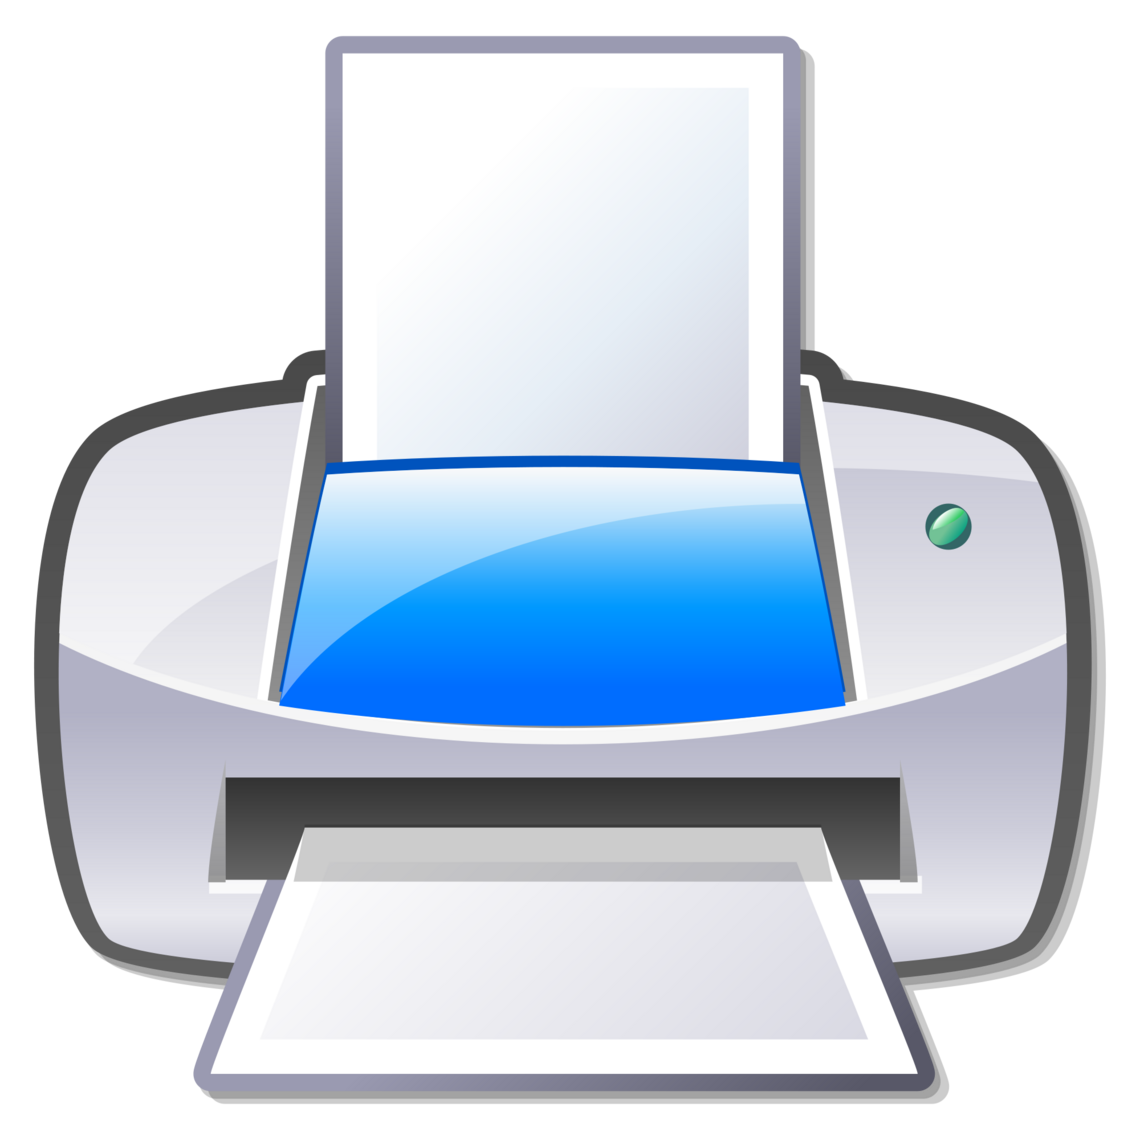 Pic of a printer